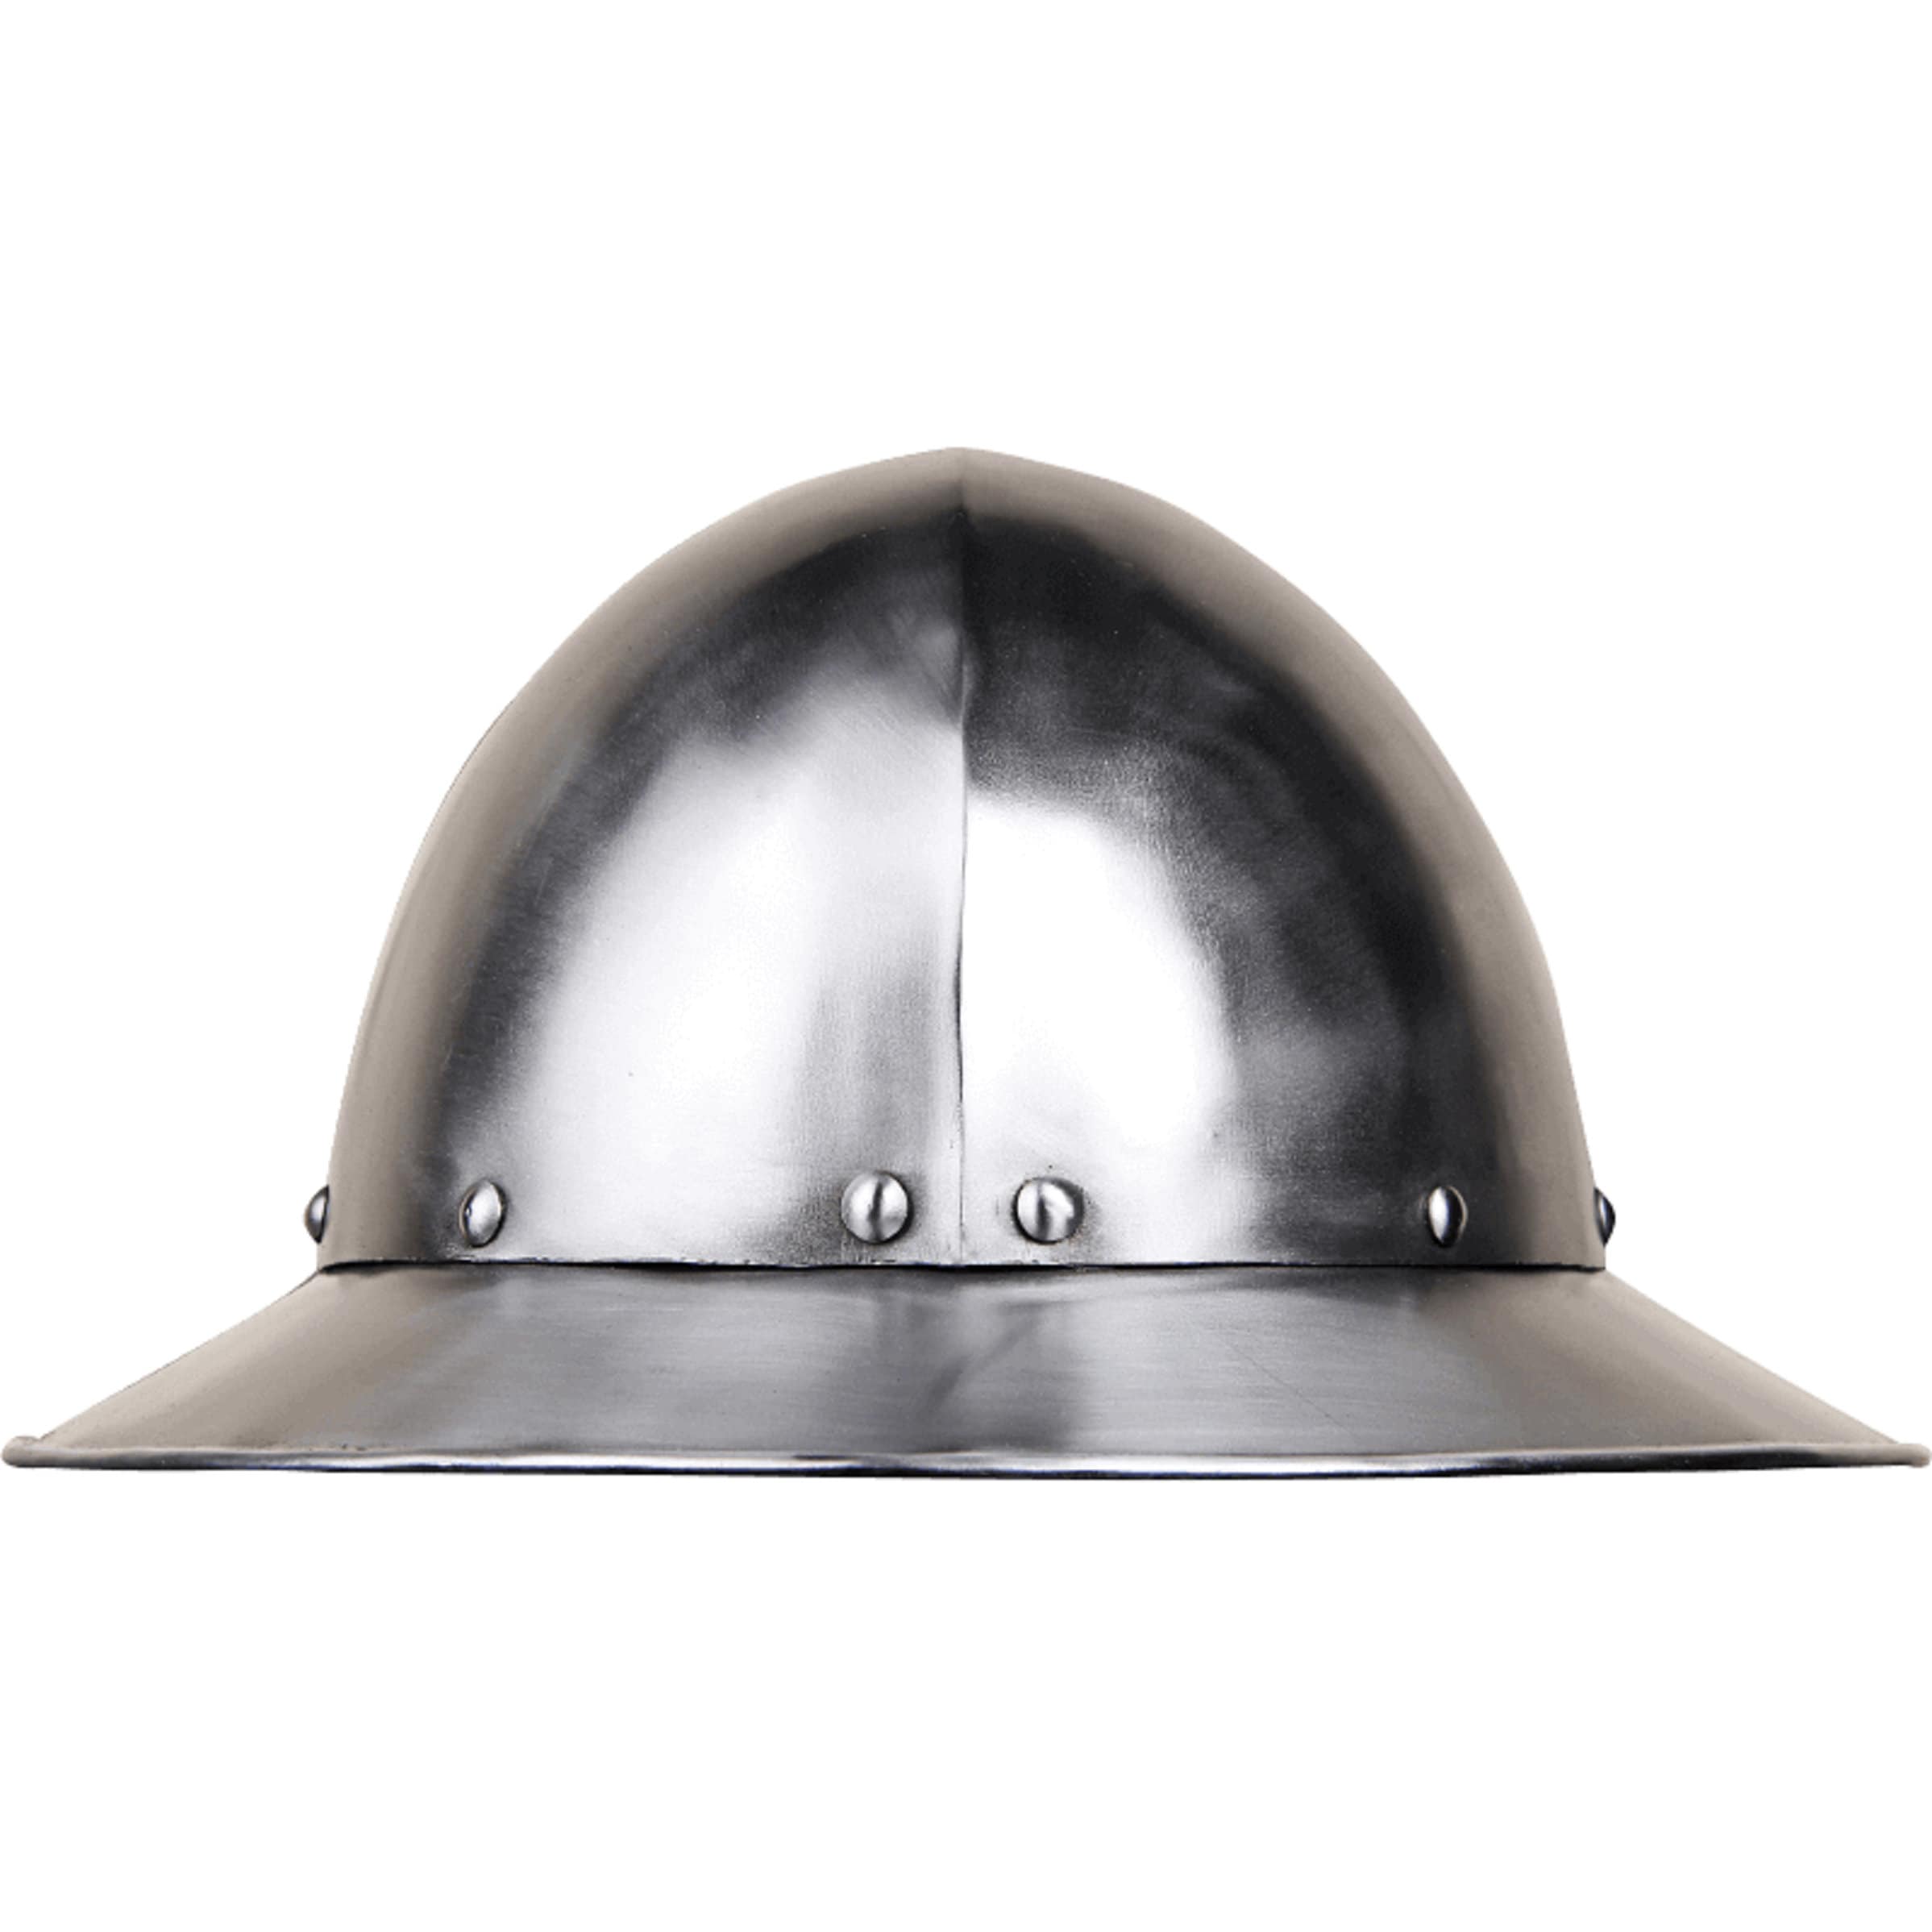 Ralf Steel Kettle Hat Helm Medieval Larp Armour Etsy Uk 